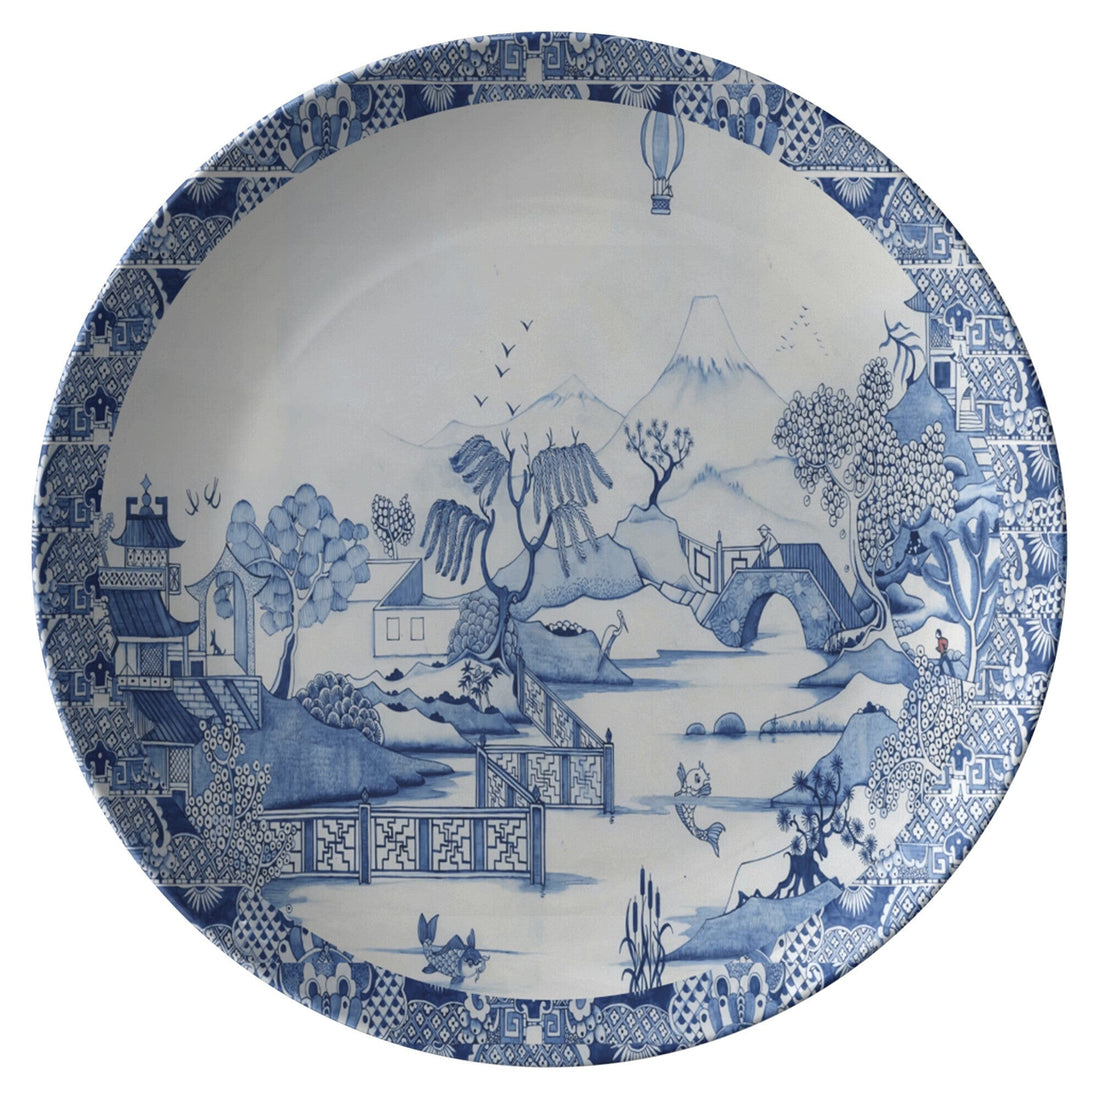 Kate McEnroe New York Dinner Plate in Blue Willow ChinoiseriePlates9820SINGLE